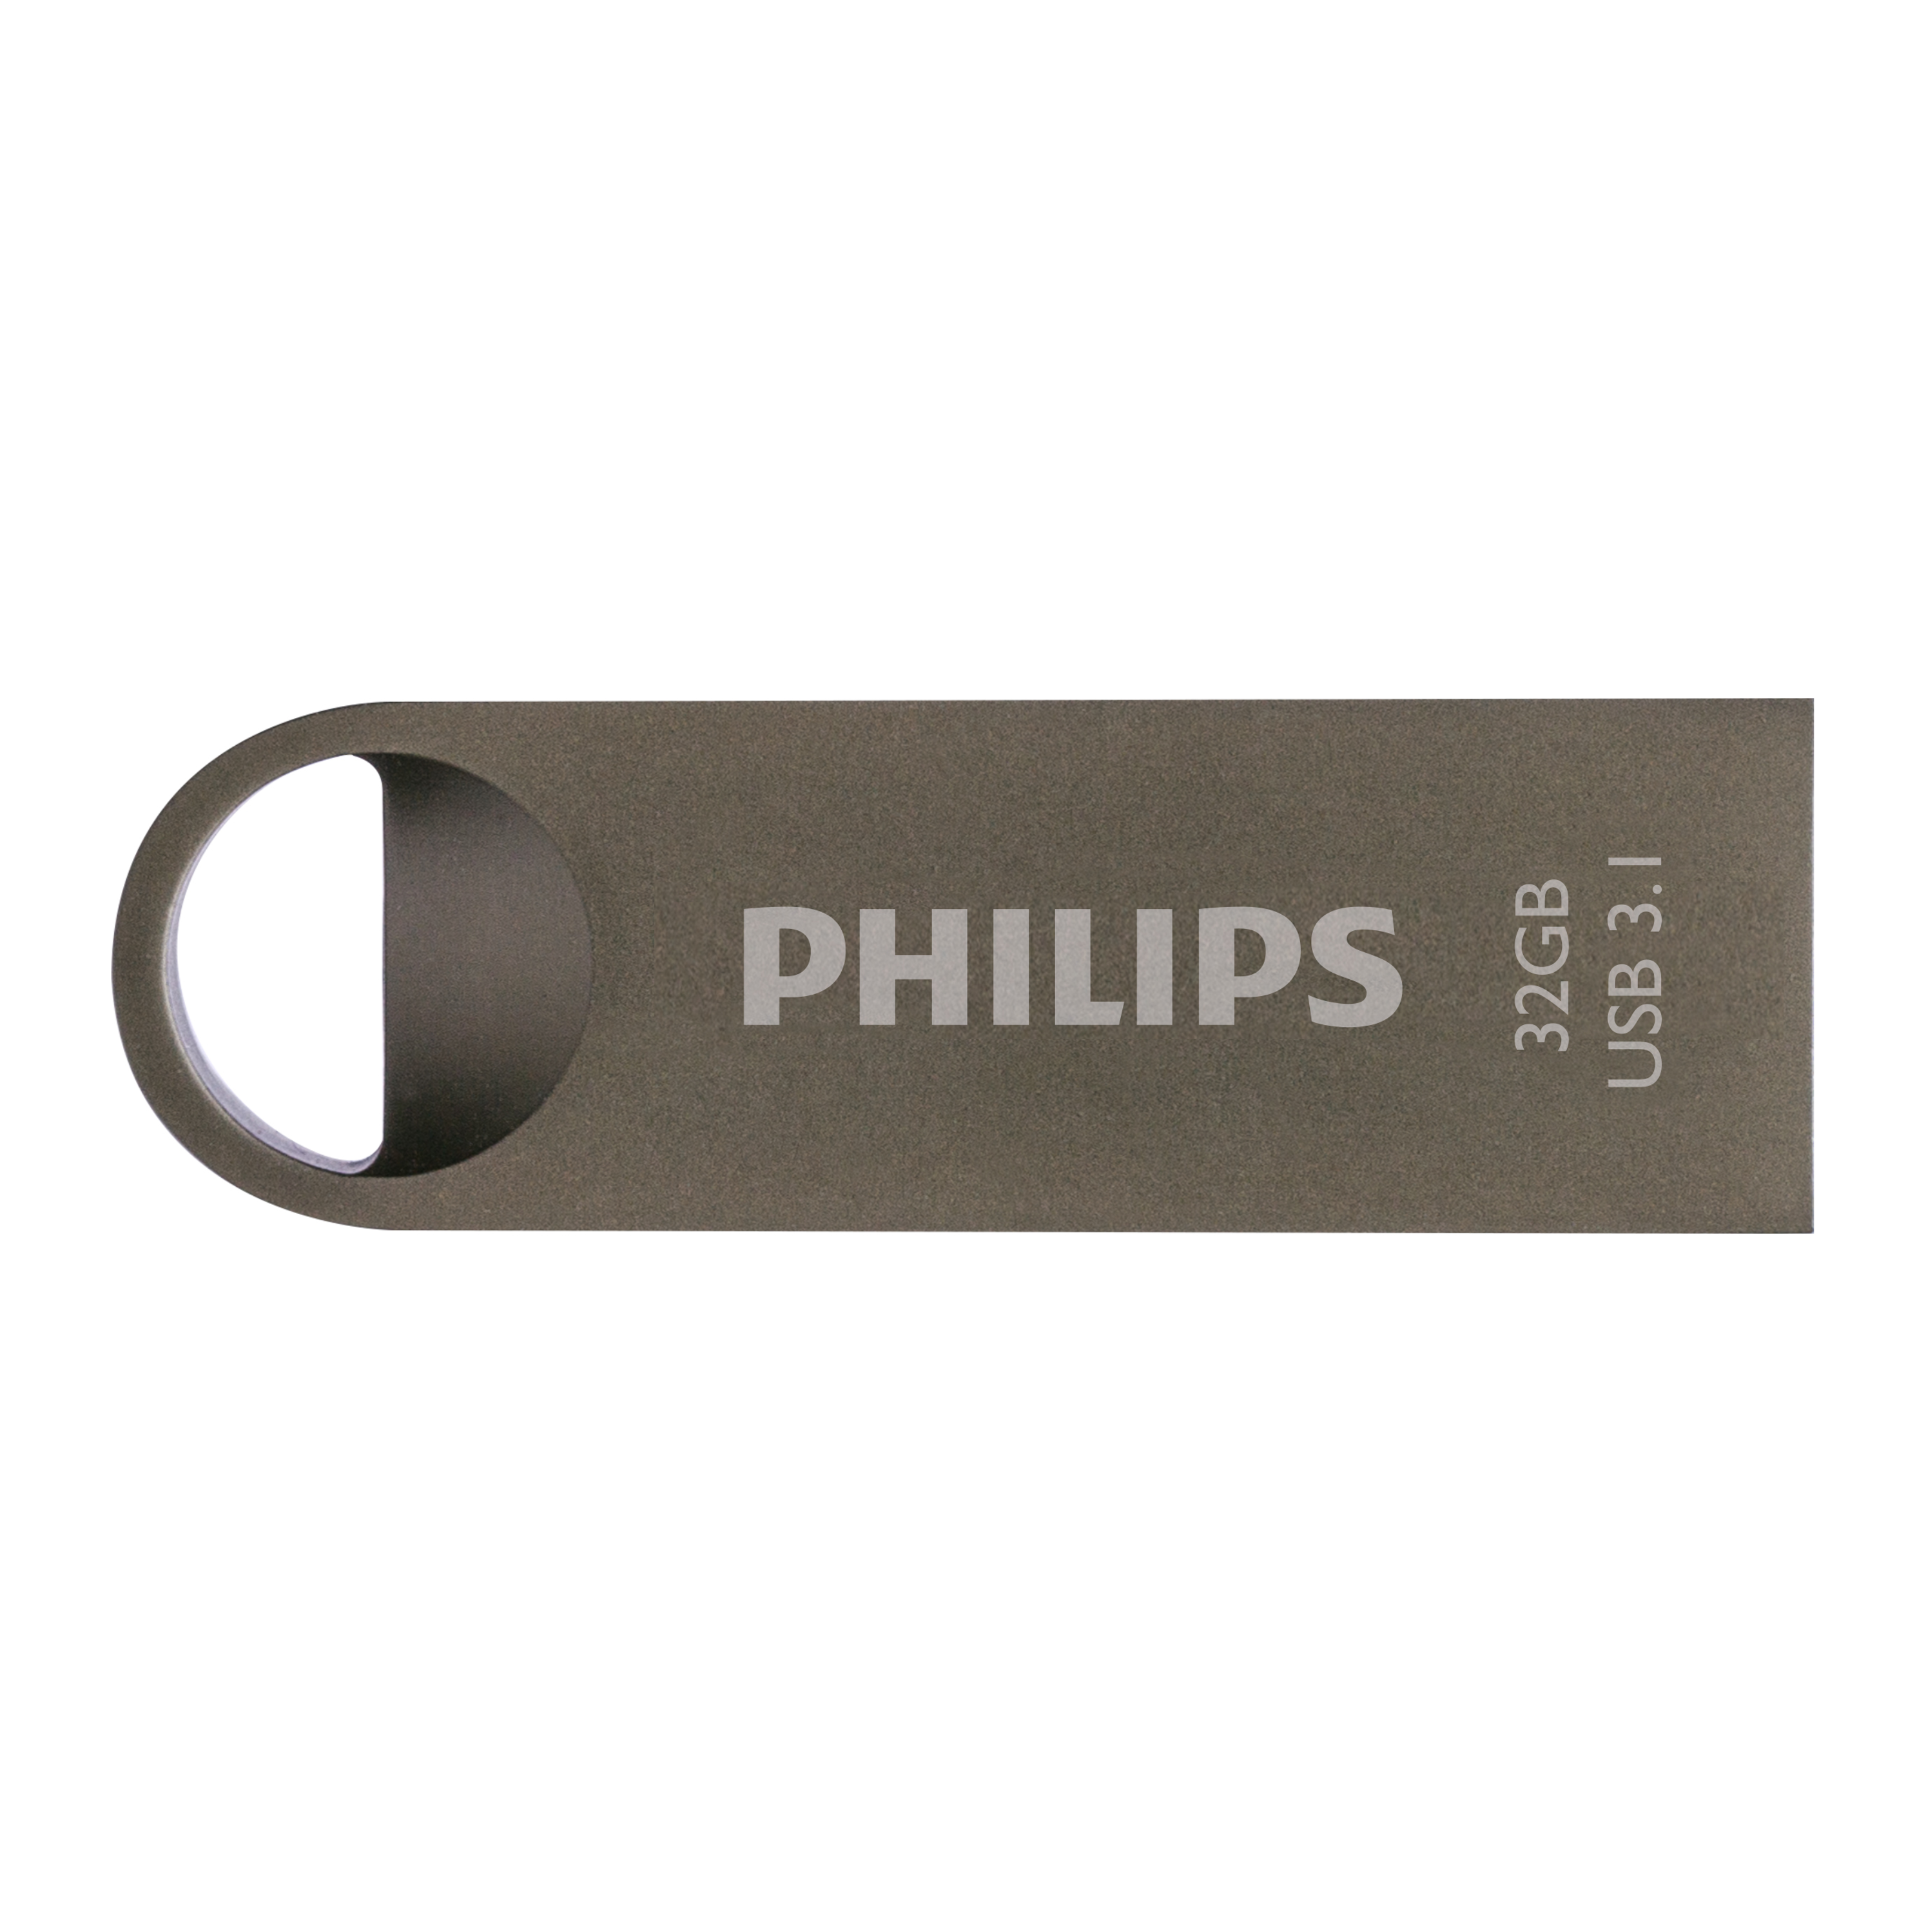 PHILIPS Moon Edition USB-Stick Grey® Space (Aluminium, GB) 32